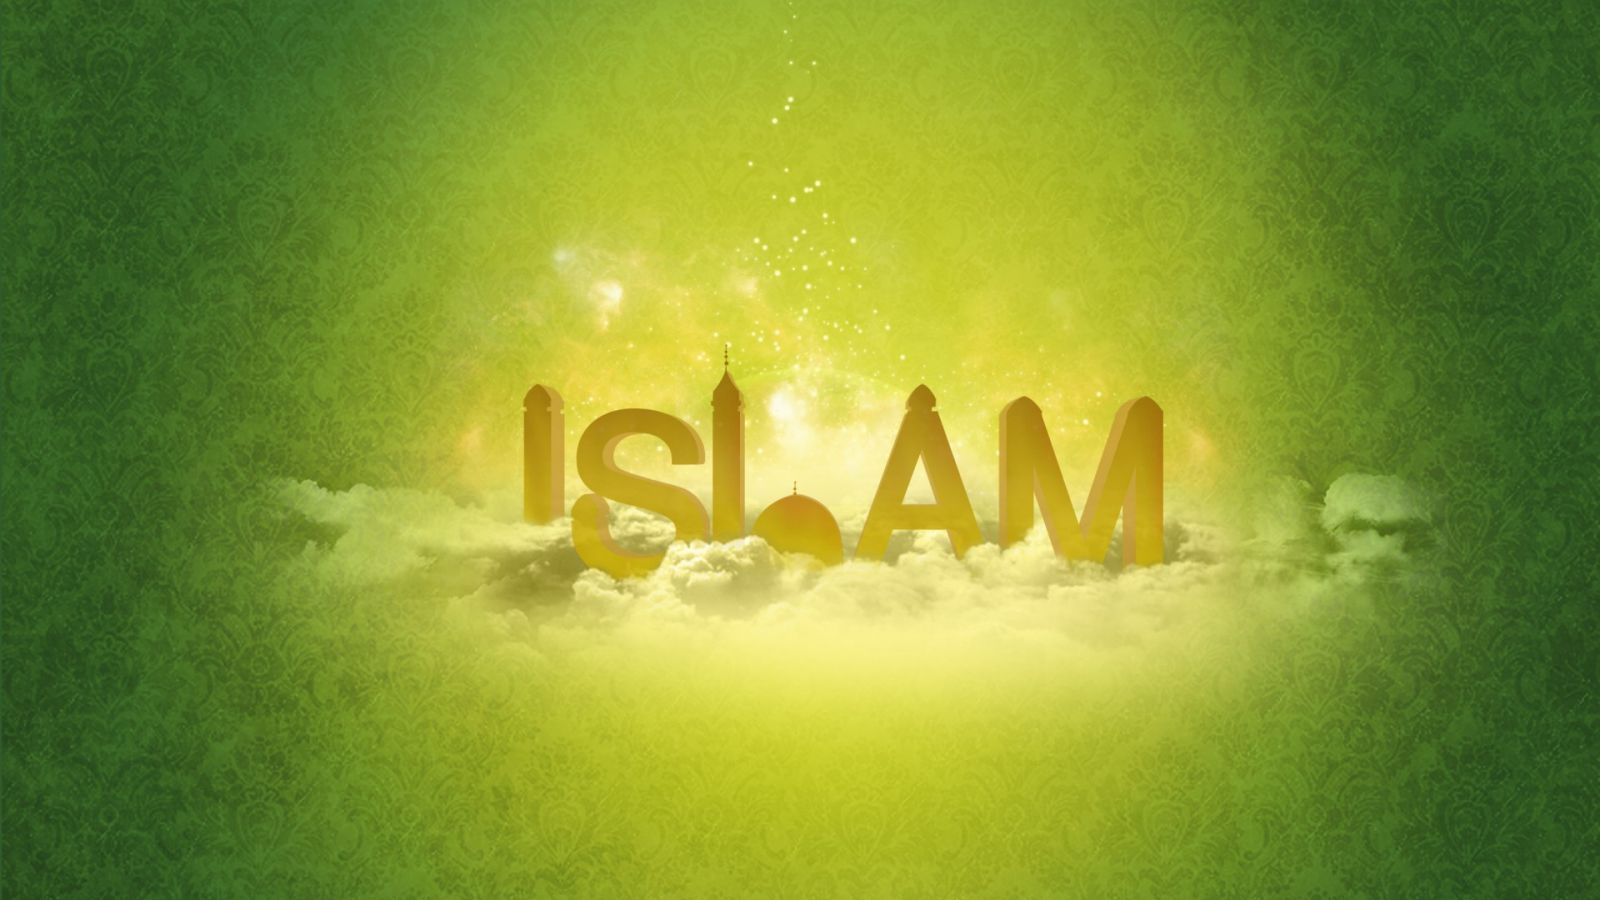 islamic wallpaper free download